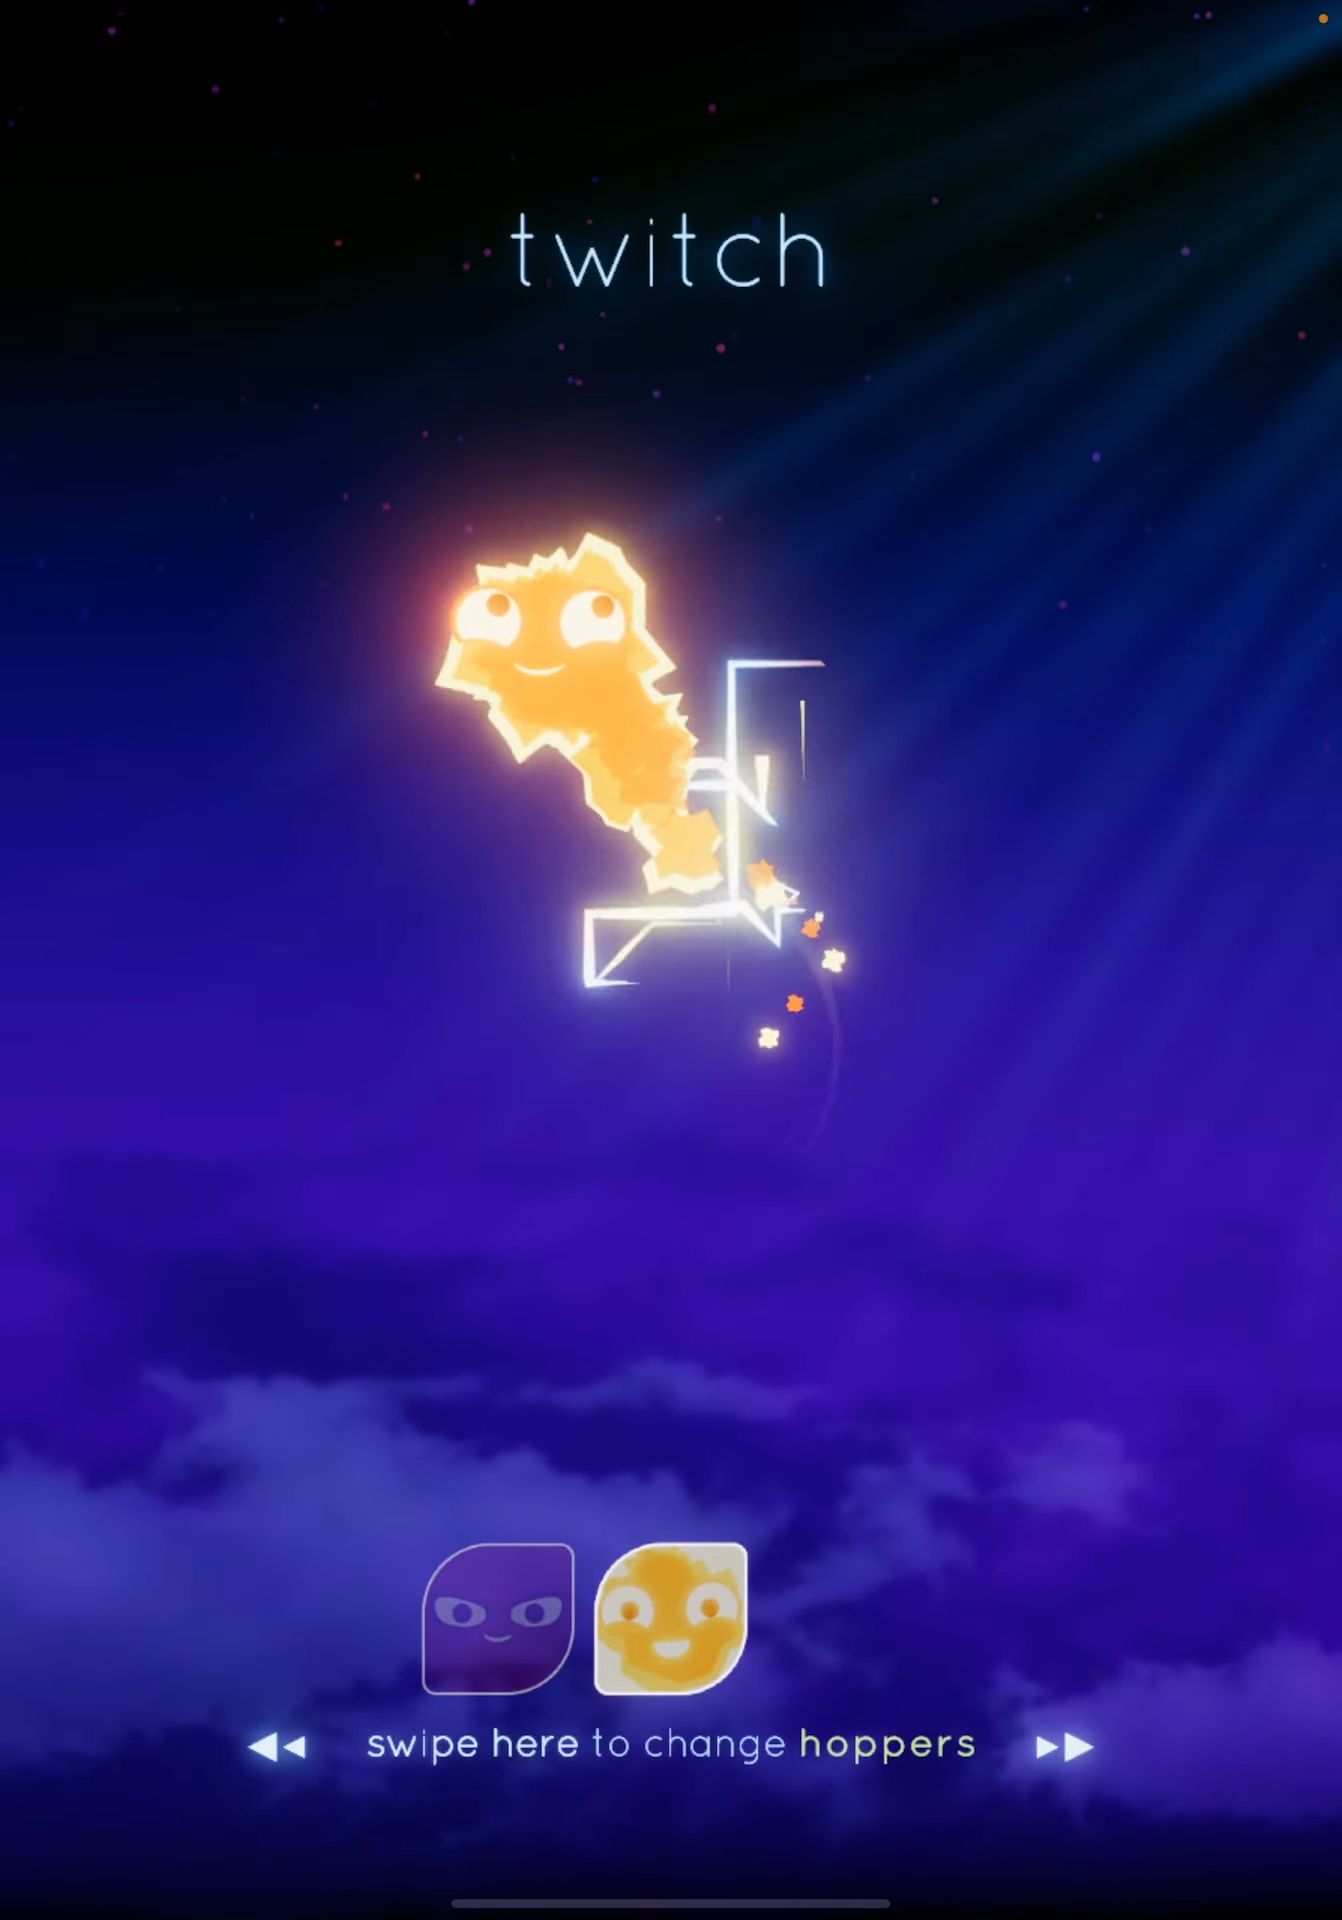 Dream Hopper - Android game screenshots.